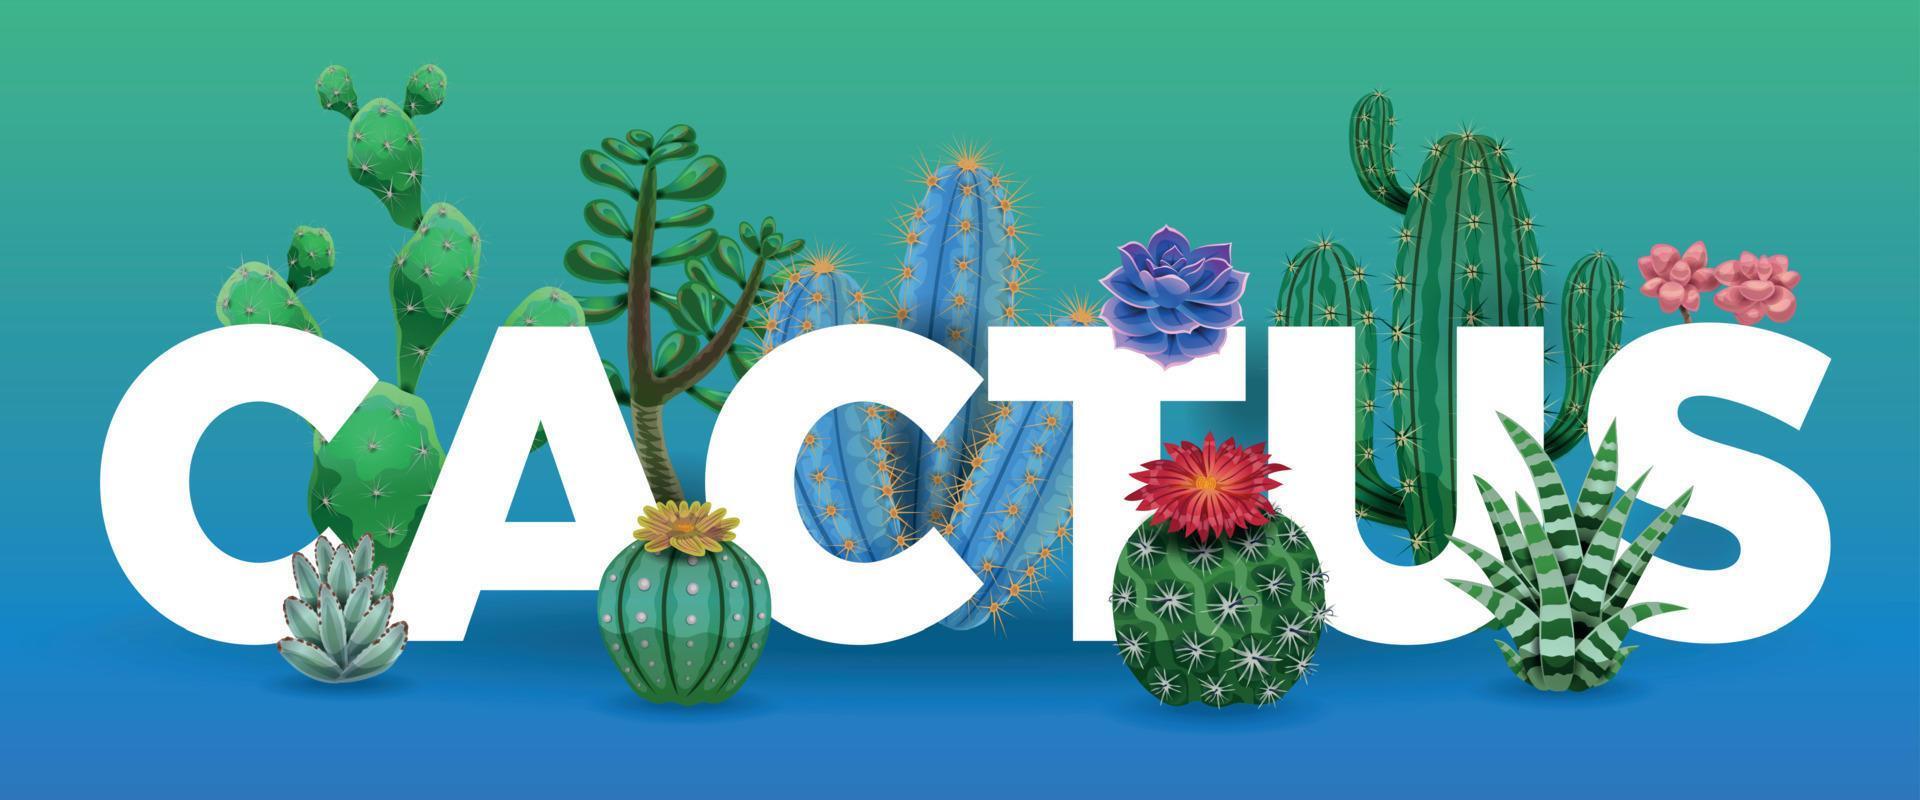 Cactus Big Letters Composition vector